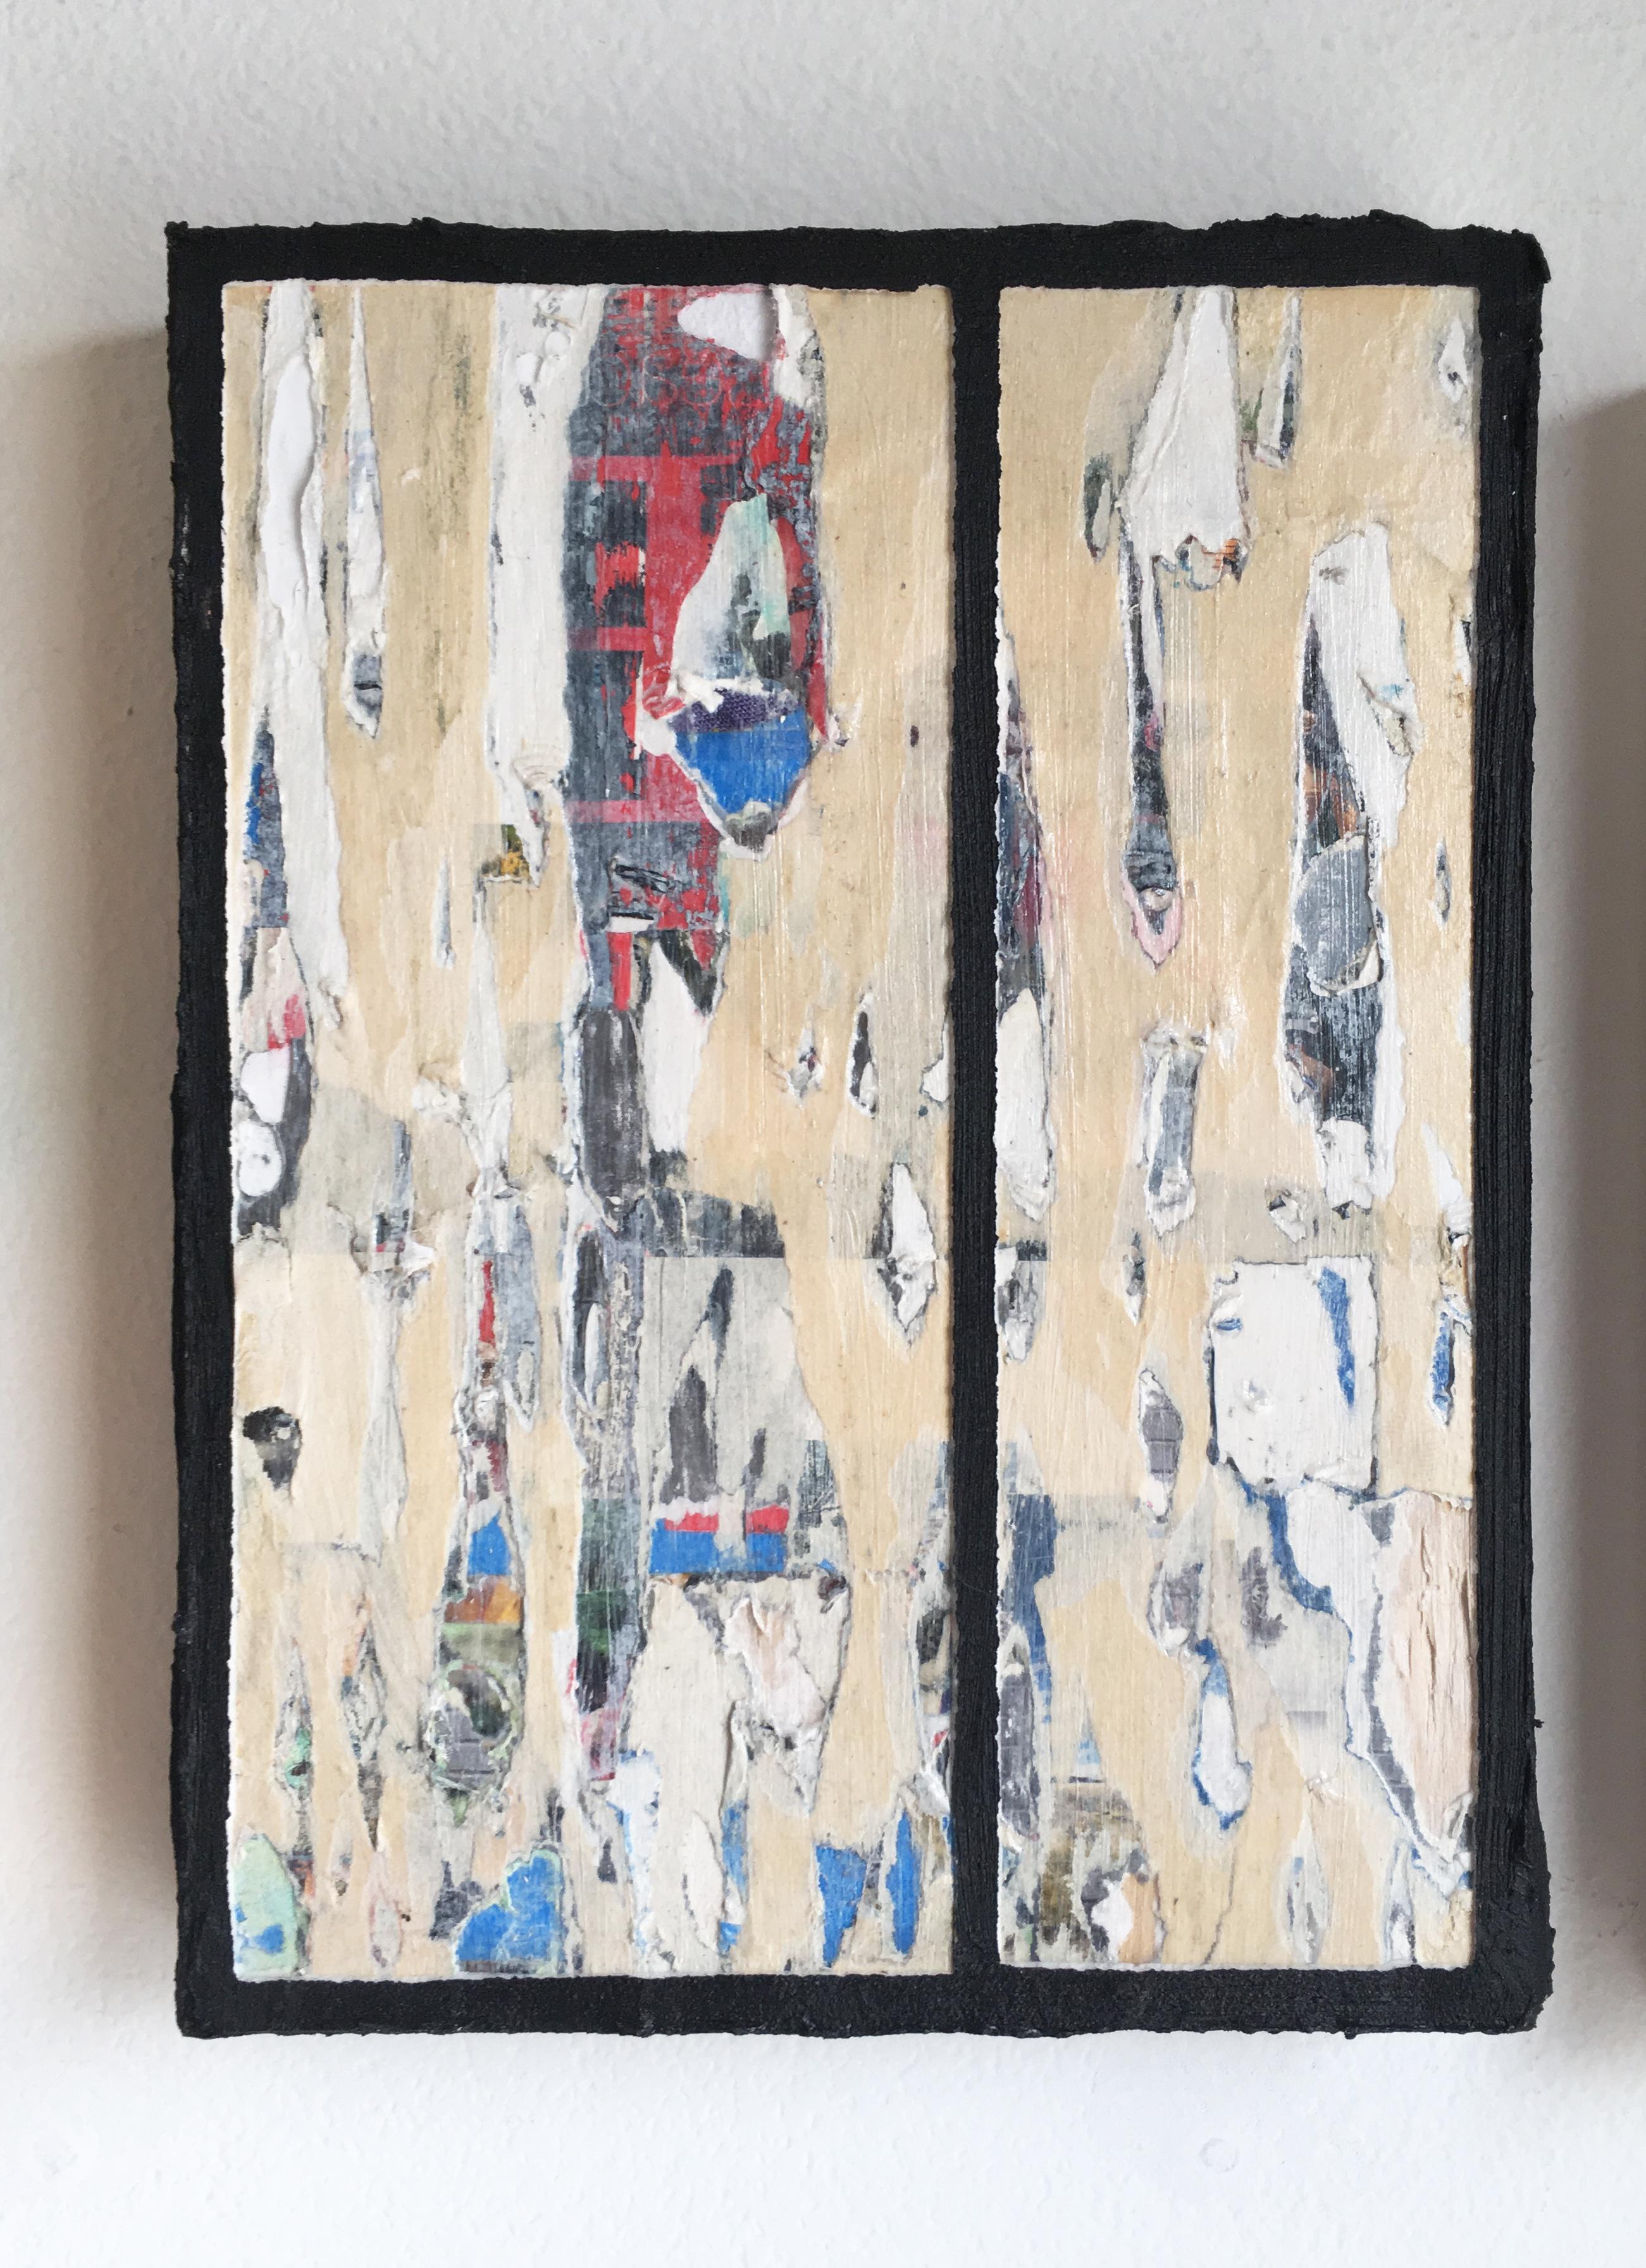 Francesca Reyes Figurative Painting - "Door #12 (Magazines)" Oil & paper on wood panel, earth tones & black, texture